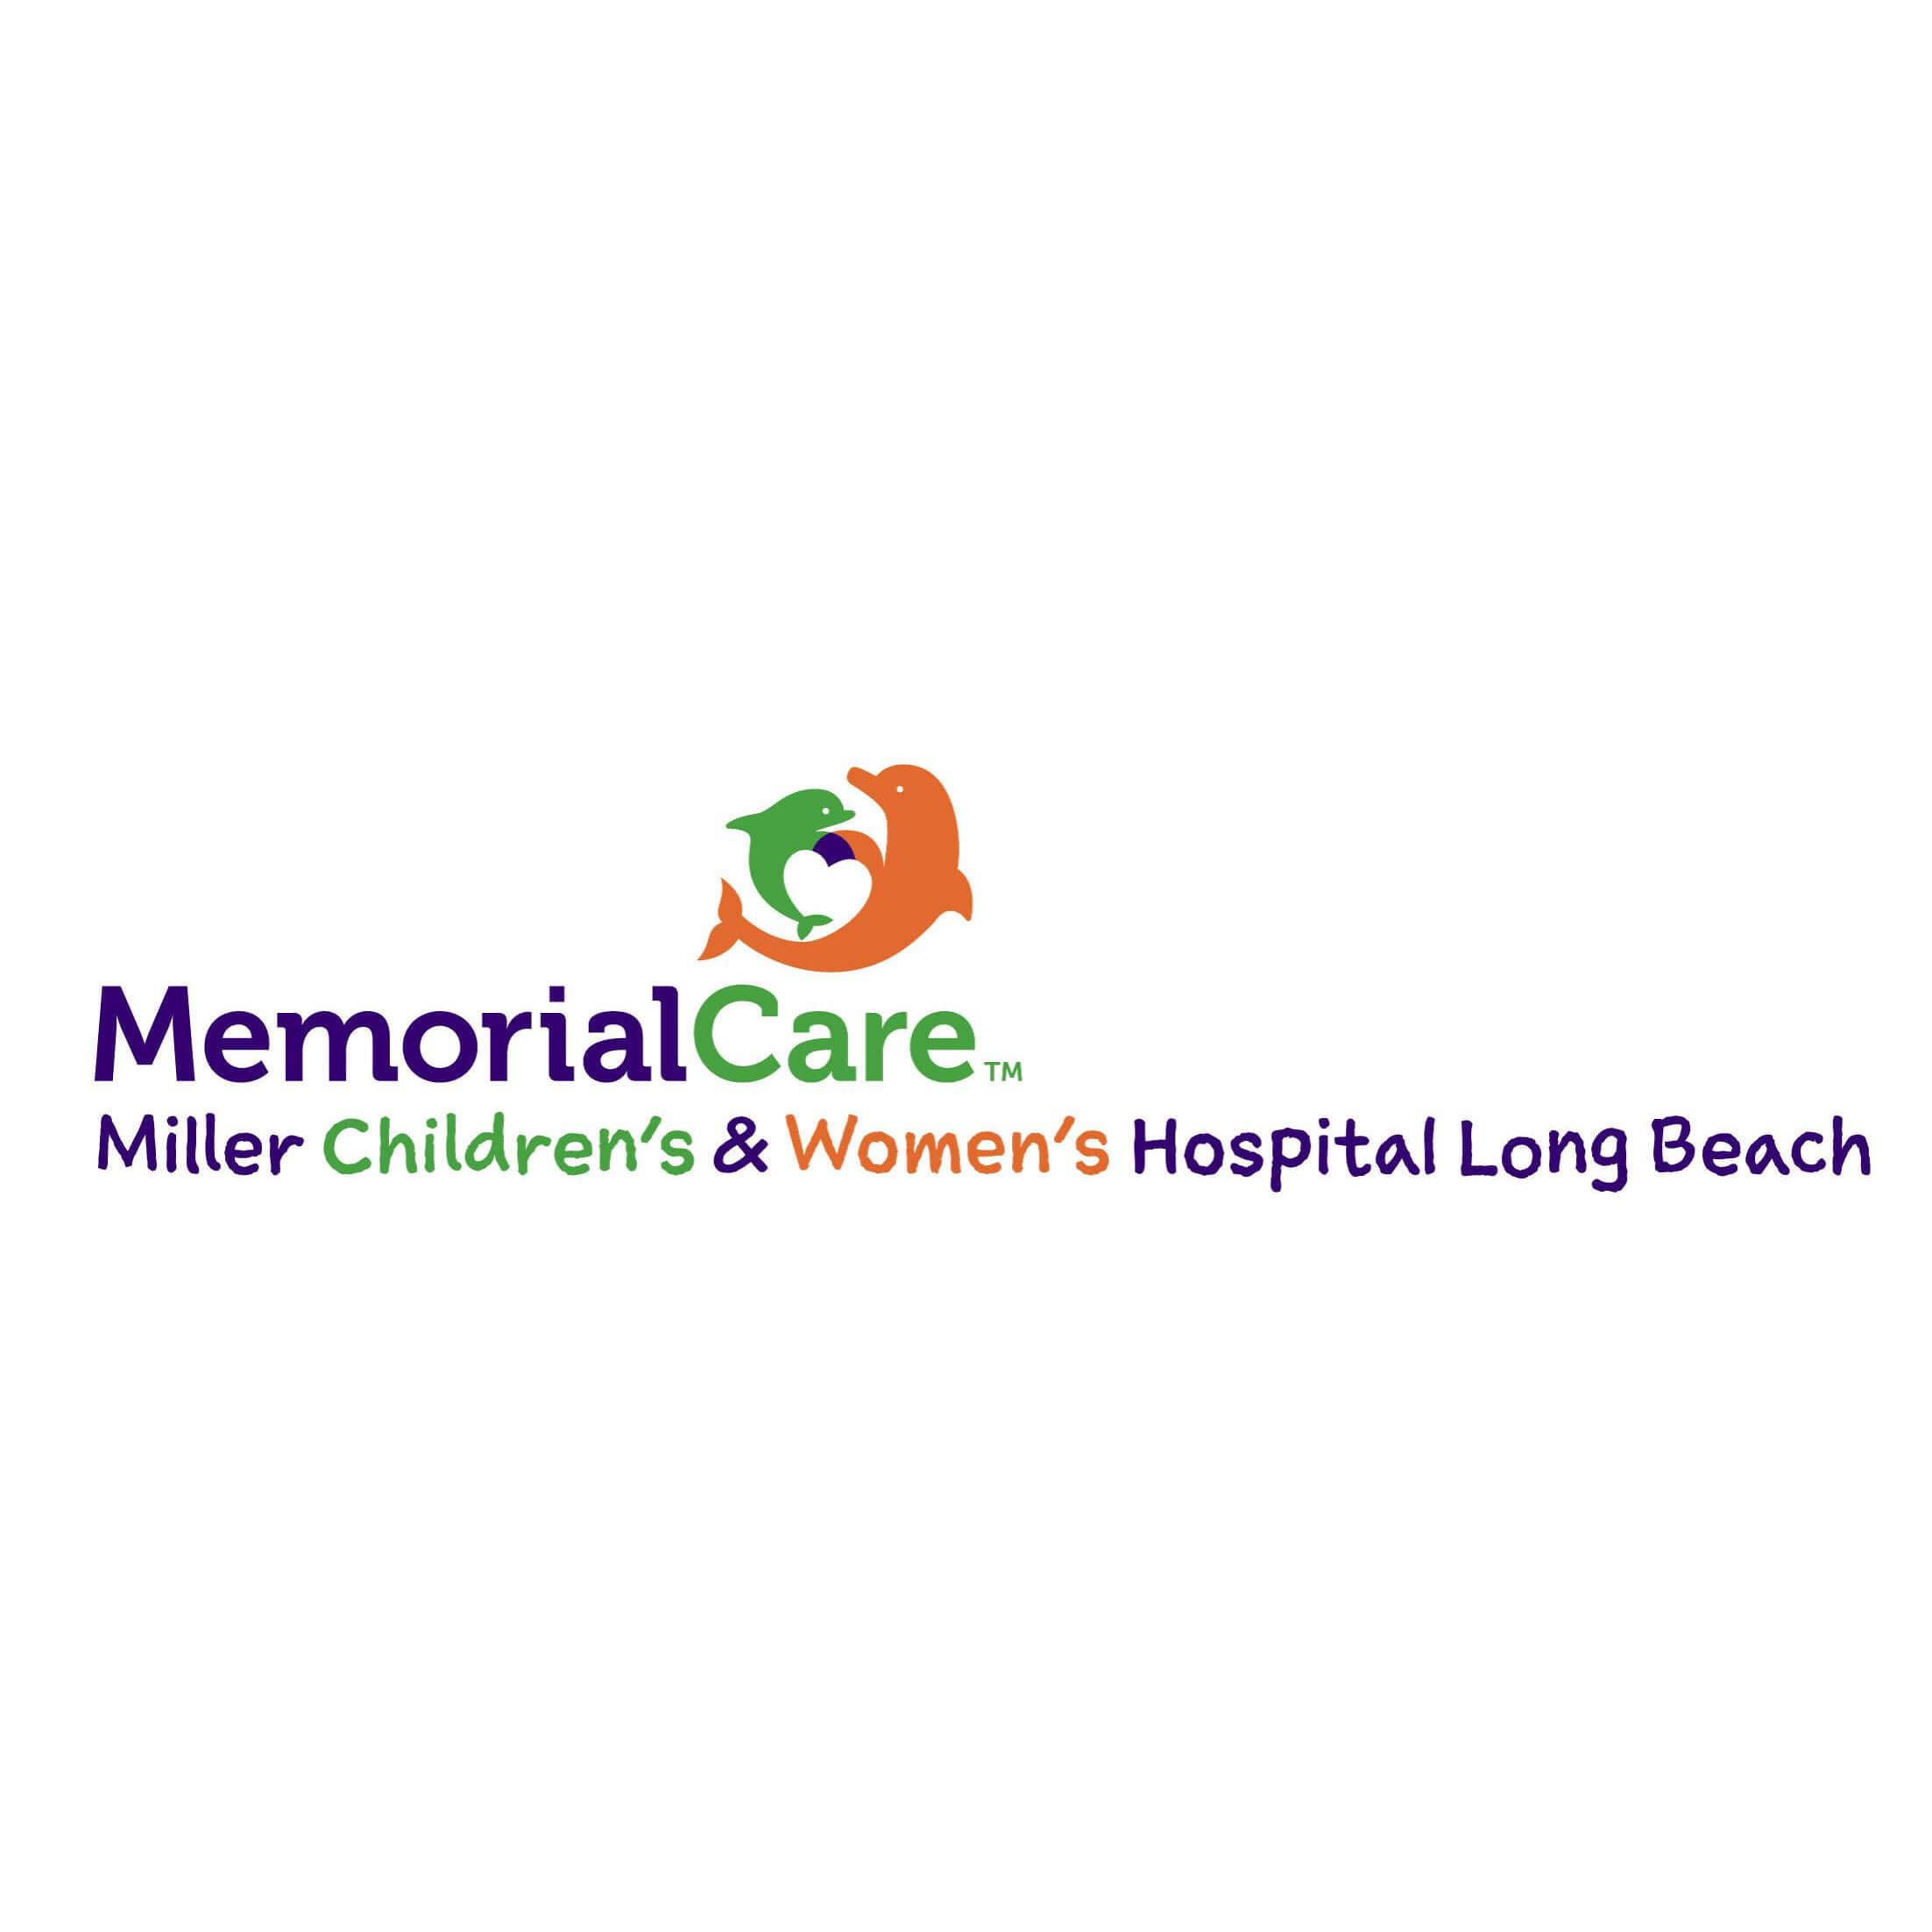 Miller Children's & Women's Hospital Long Beach